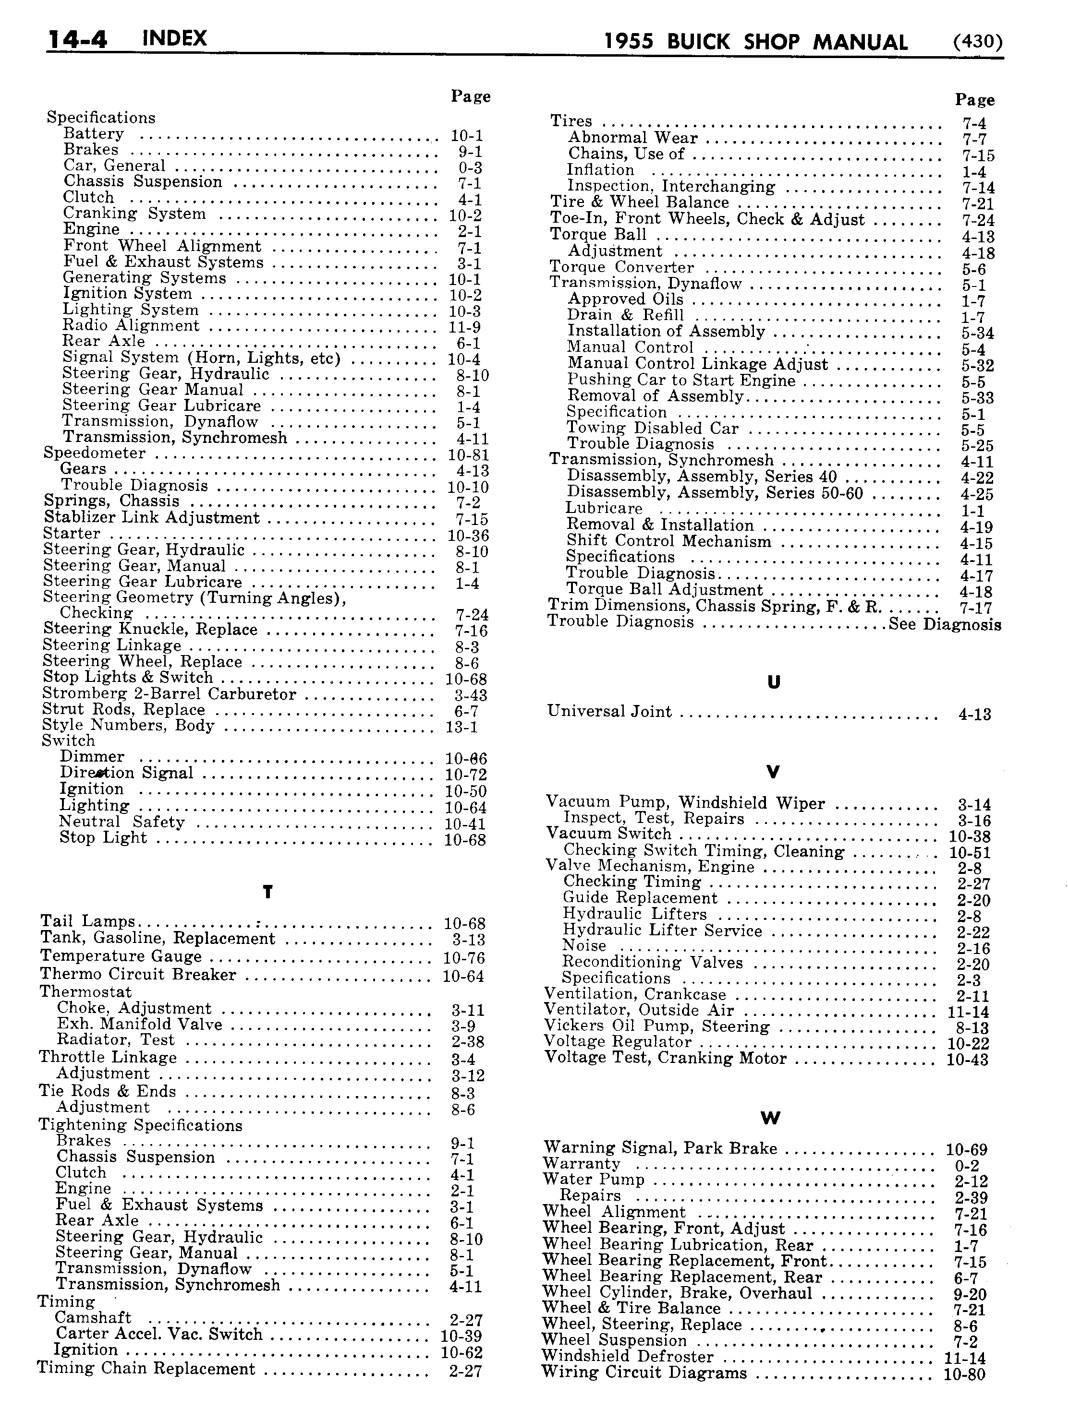 n_15 1955 Buick Shop Manual - Index-004-004.jpg